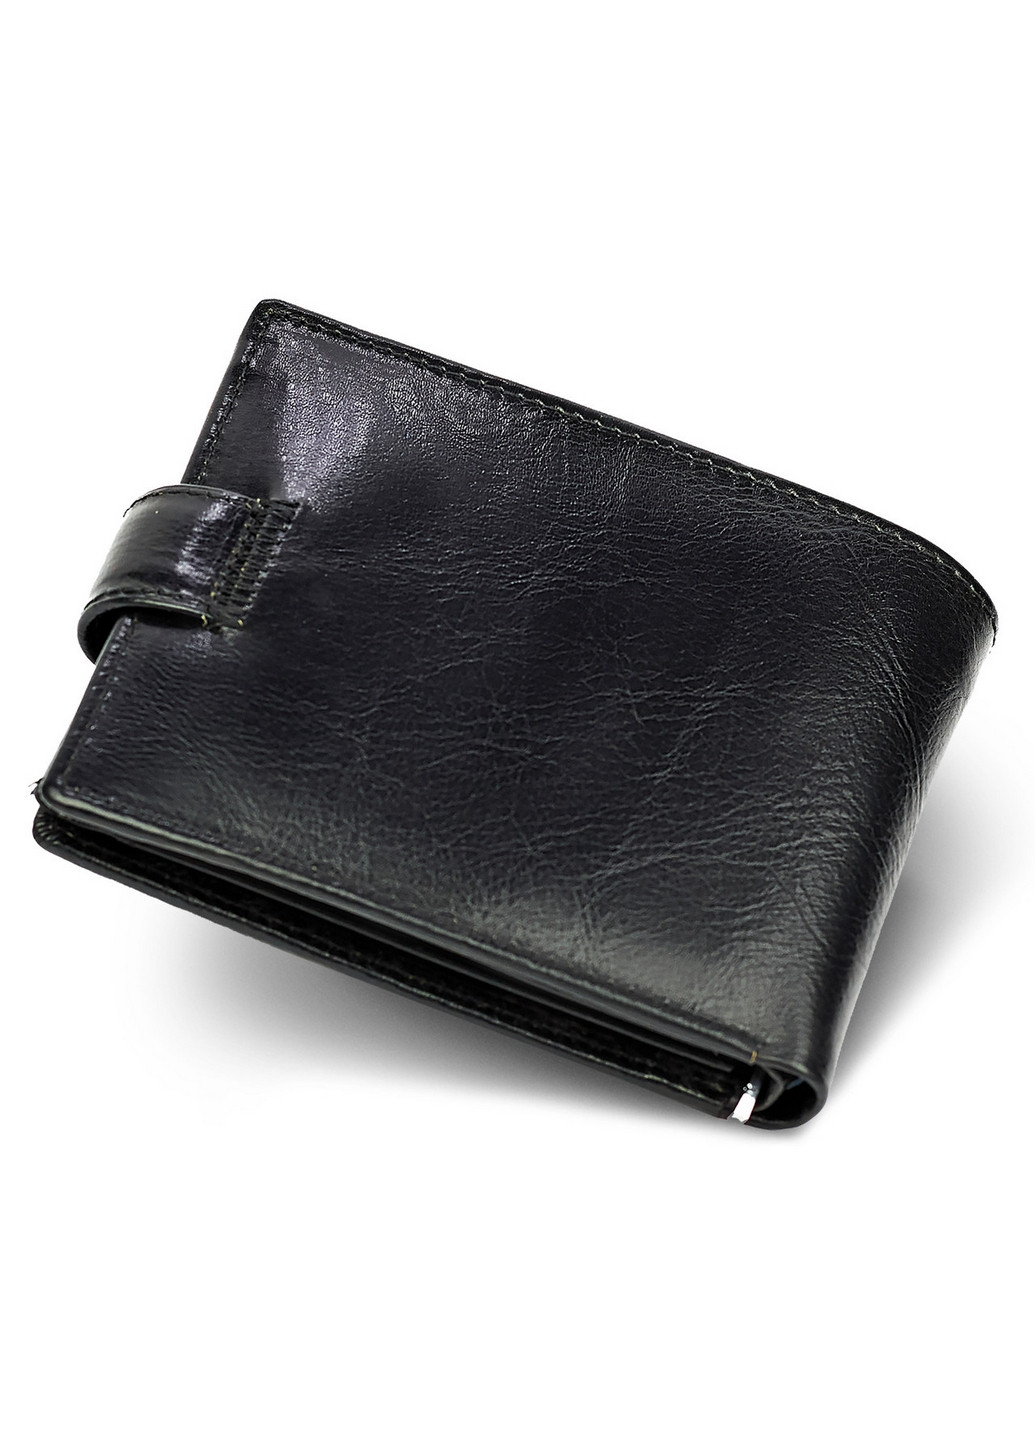 Кожаное мужское портмоне ST Leather Accessories (277689303)